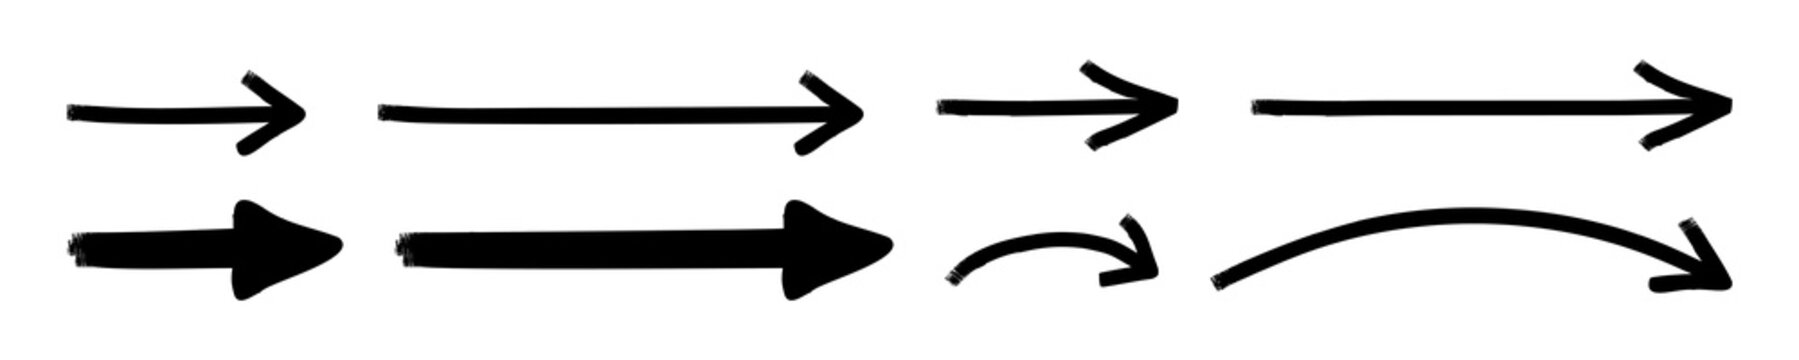 arrow handdrawn whiteboard marker pen black vector set. highlighter arrow sign isolated on white background